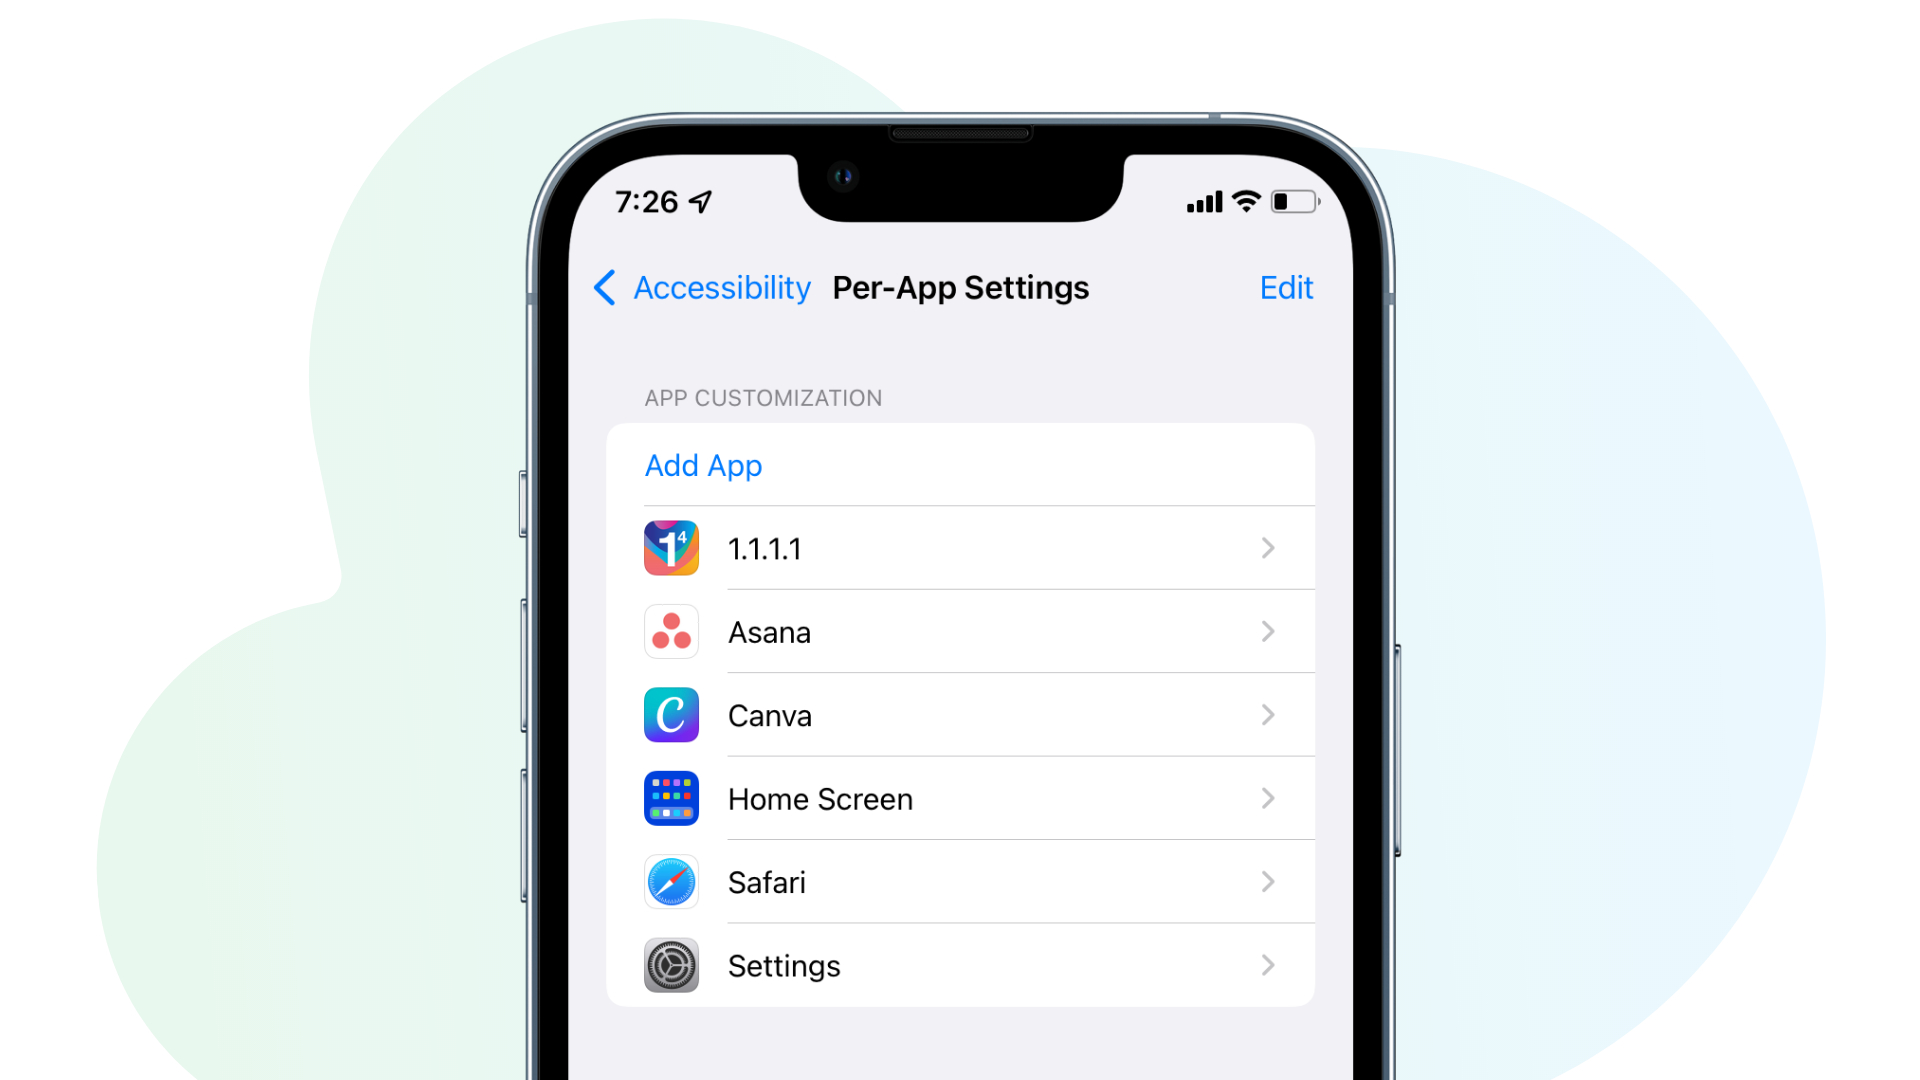 Per-App Setting on iPhone in iOS 15